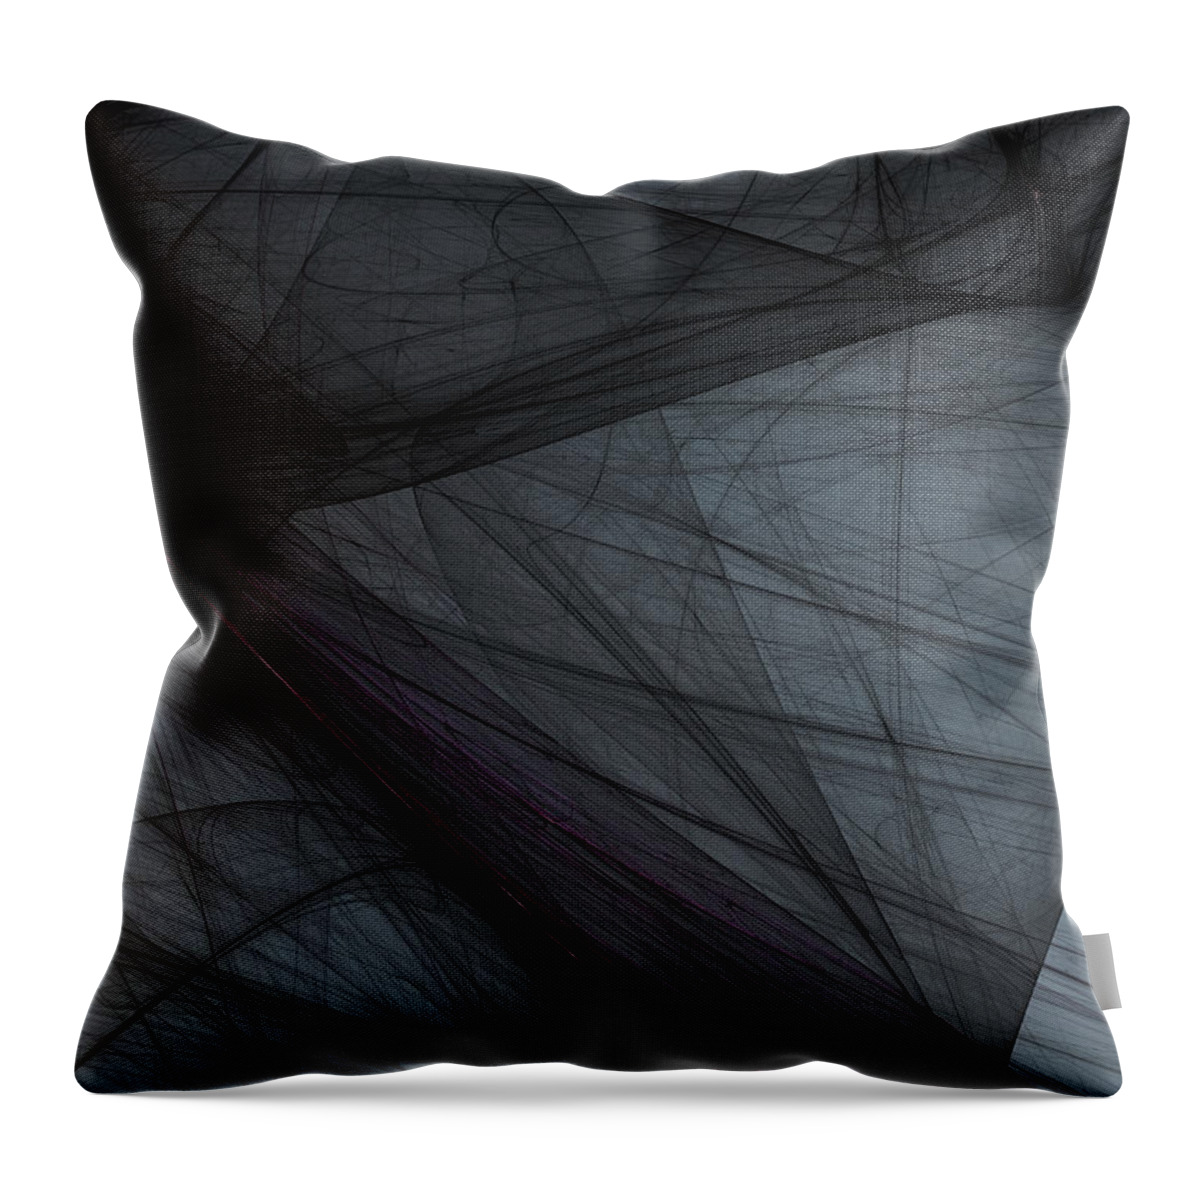 Art Throw Pillow featuring the digital art Bone Grope by Jeff Iverson